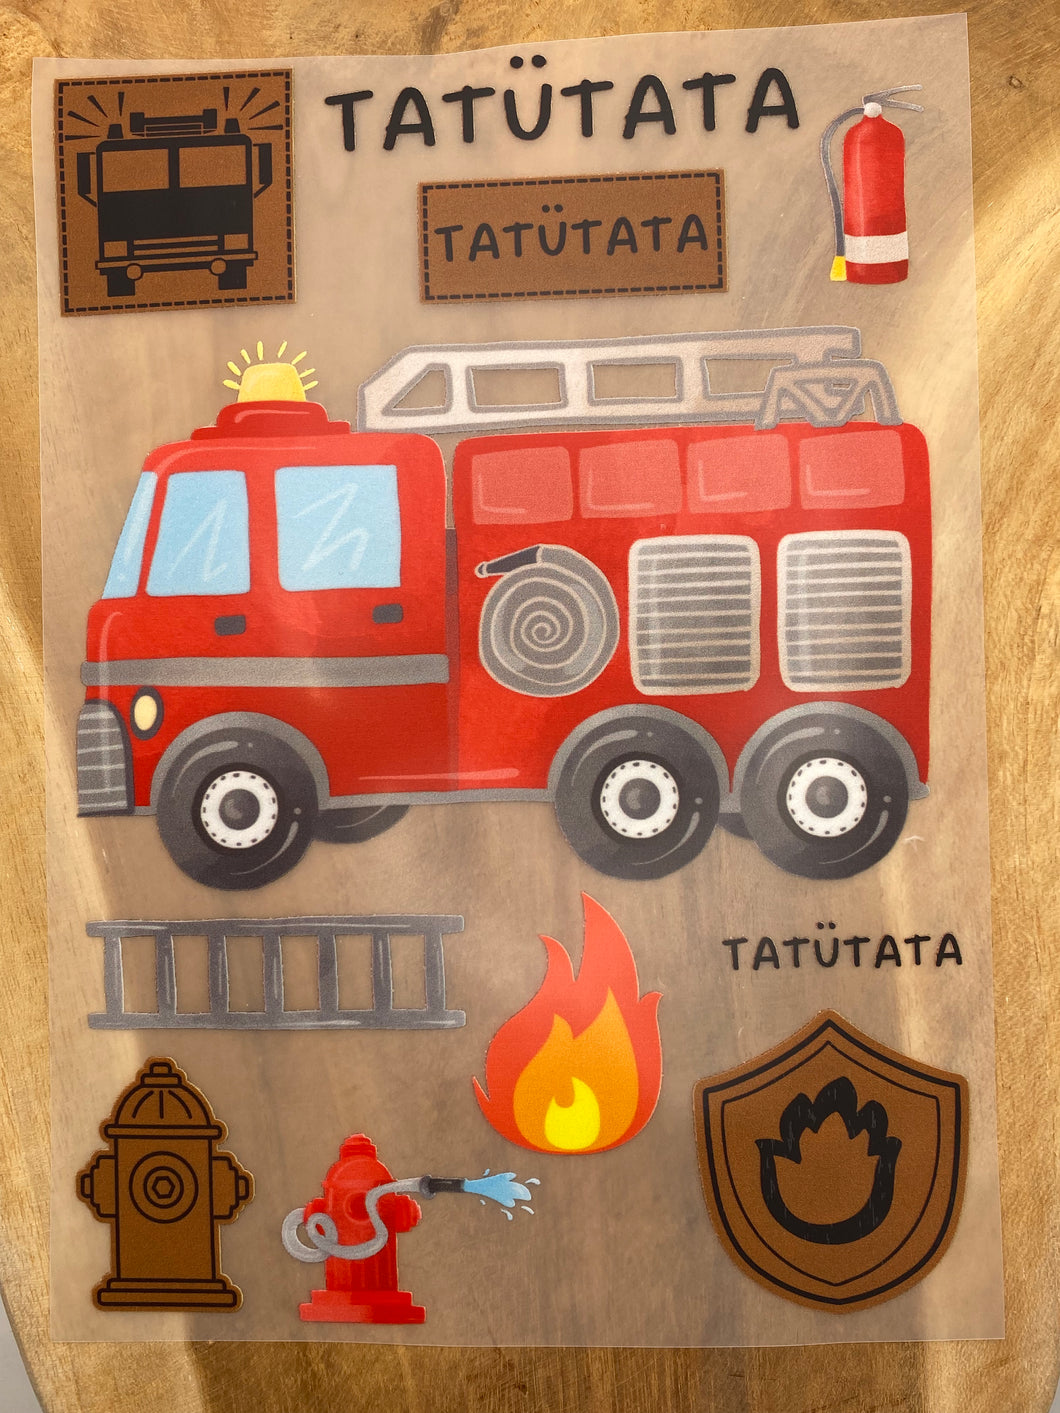 Tatütata - Feuerwehr Bügel-Bild Set Eigenproduktion